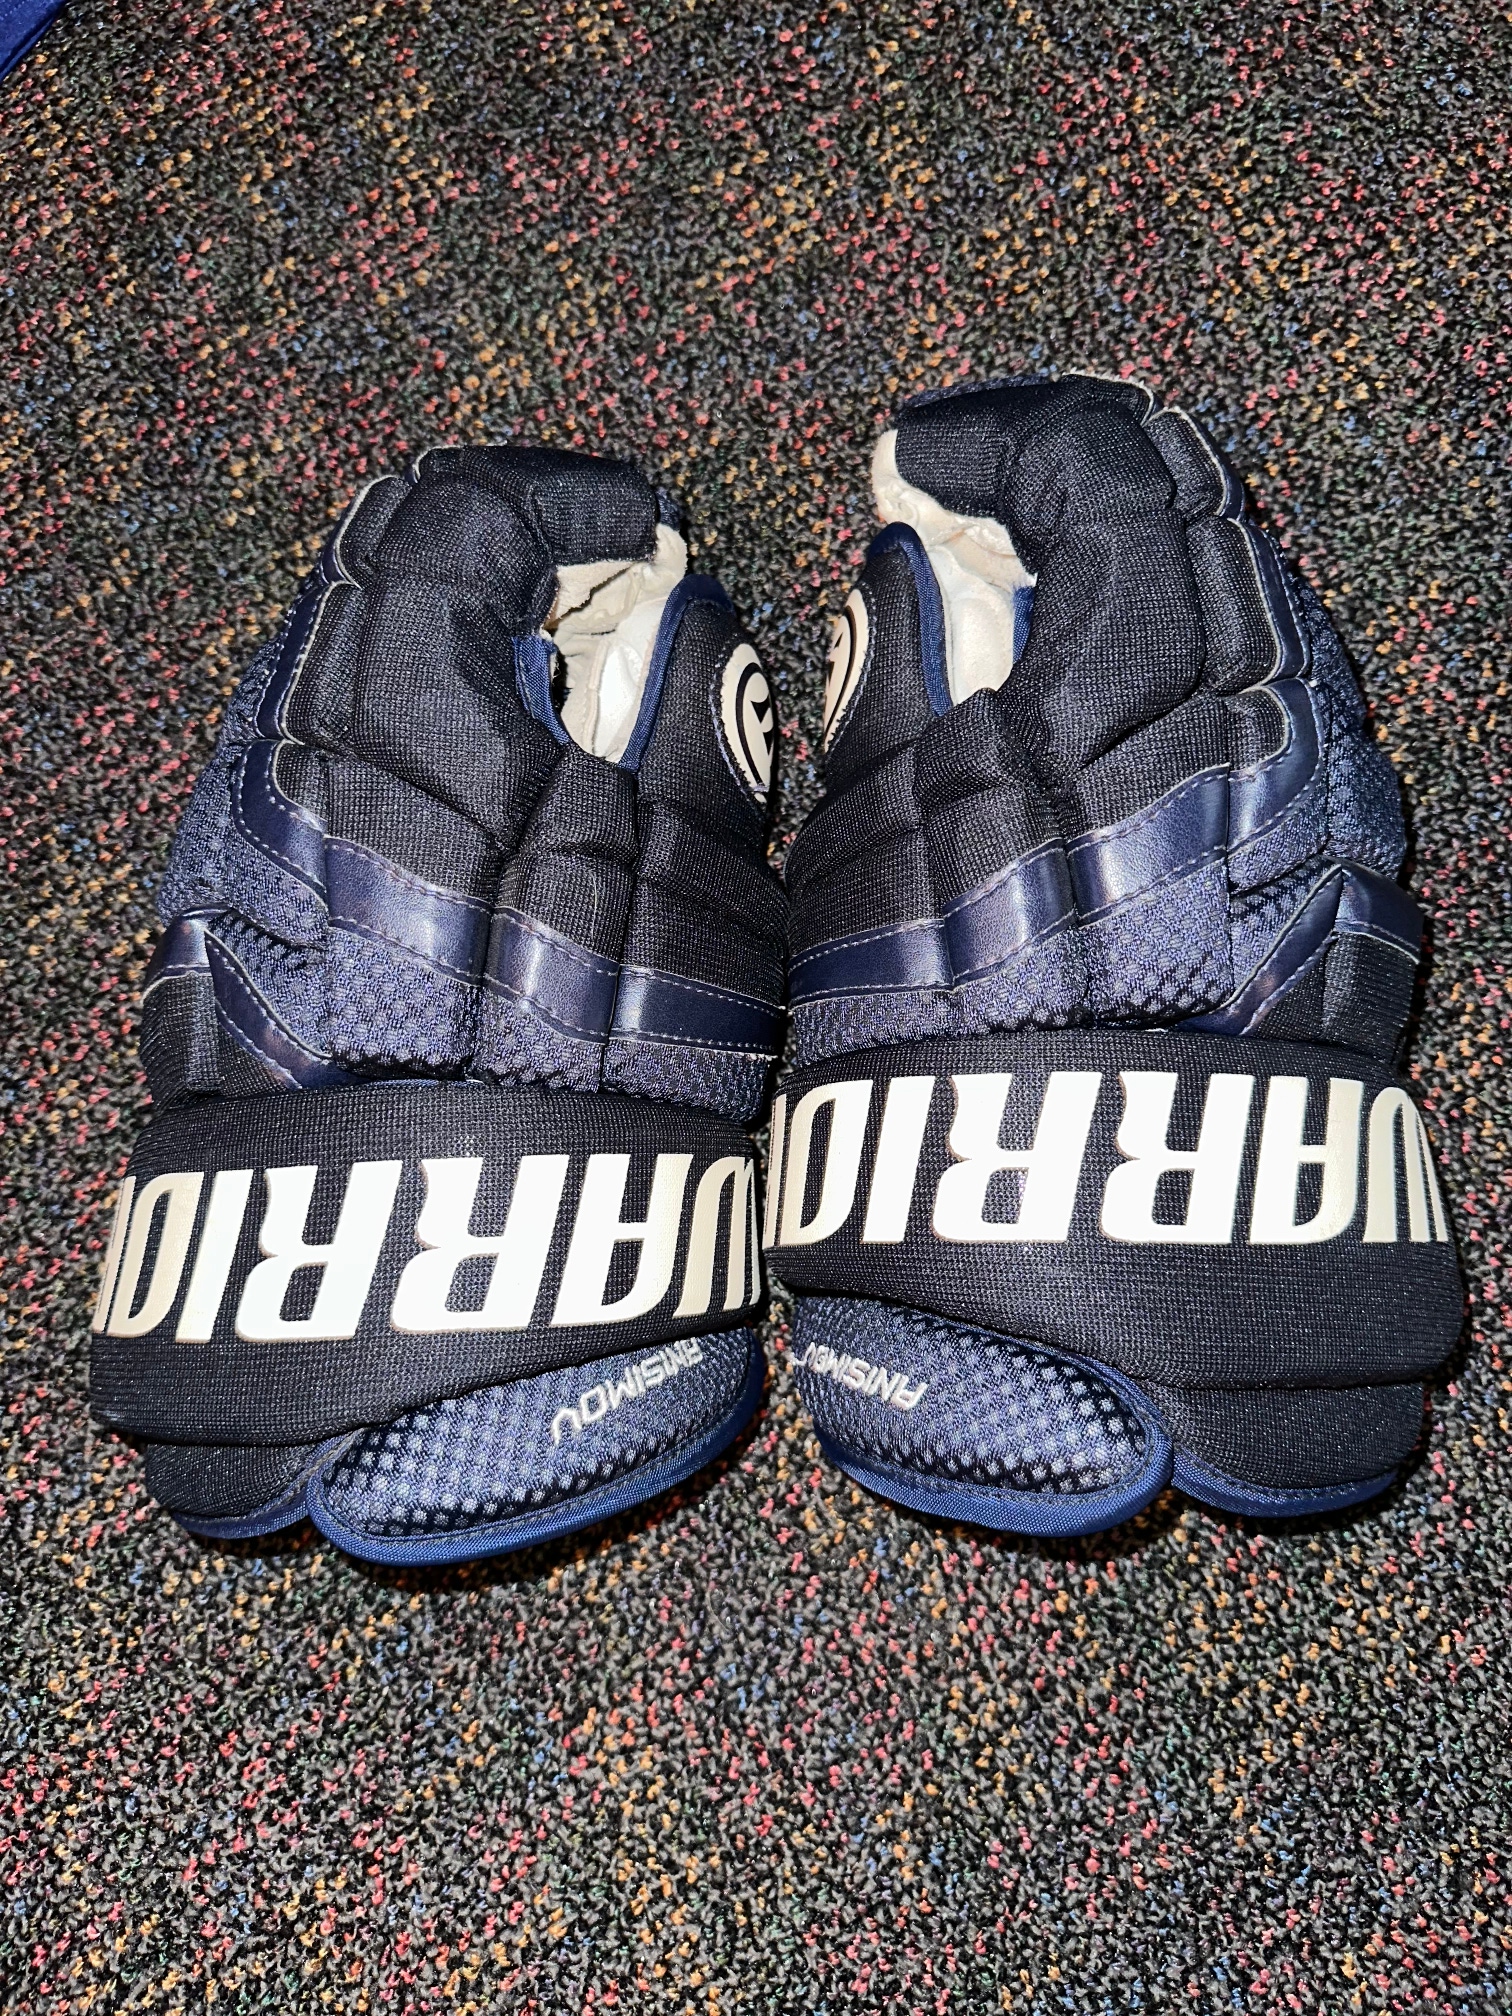 Used Warrior Gloves 14" Pro Stock anisimov MIC